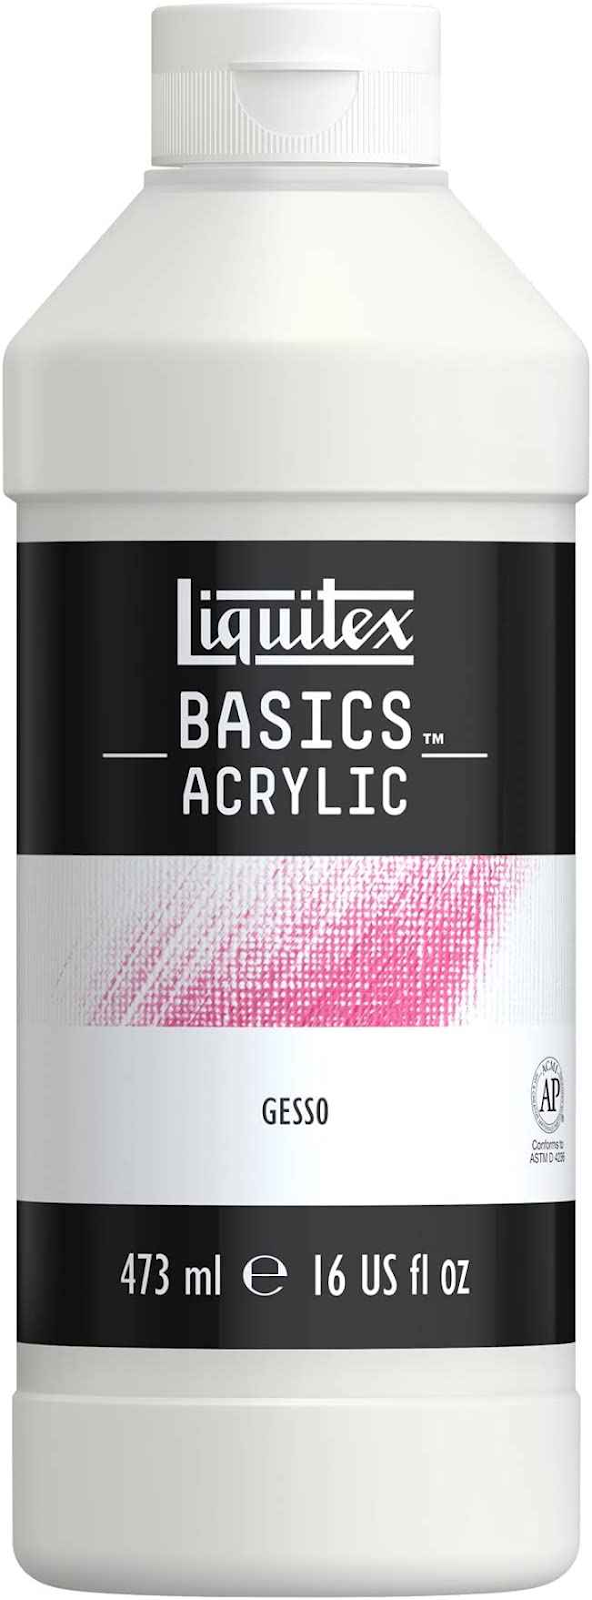 liquitex basics acrylic, paint